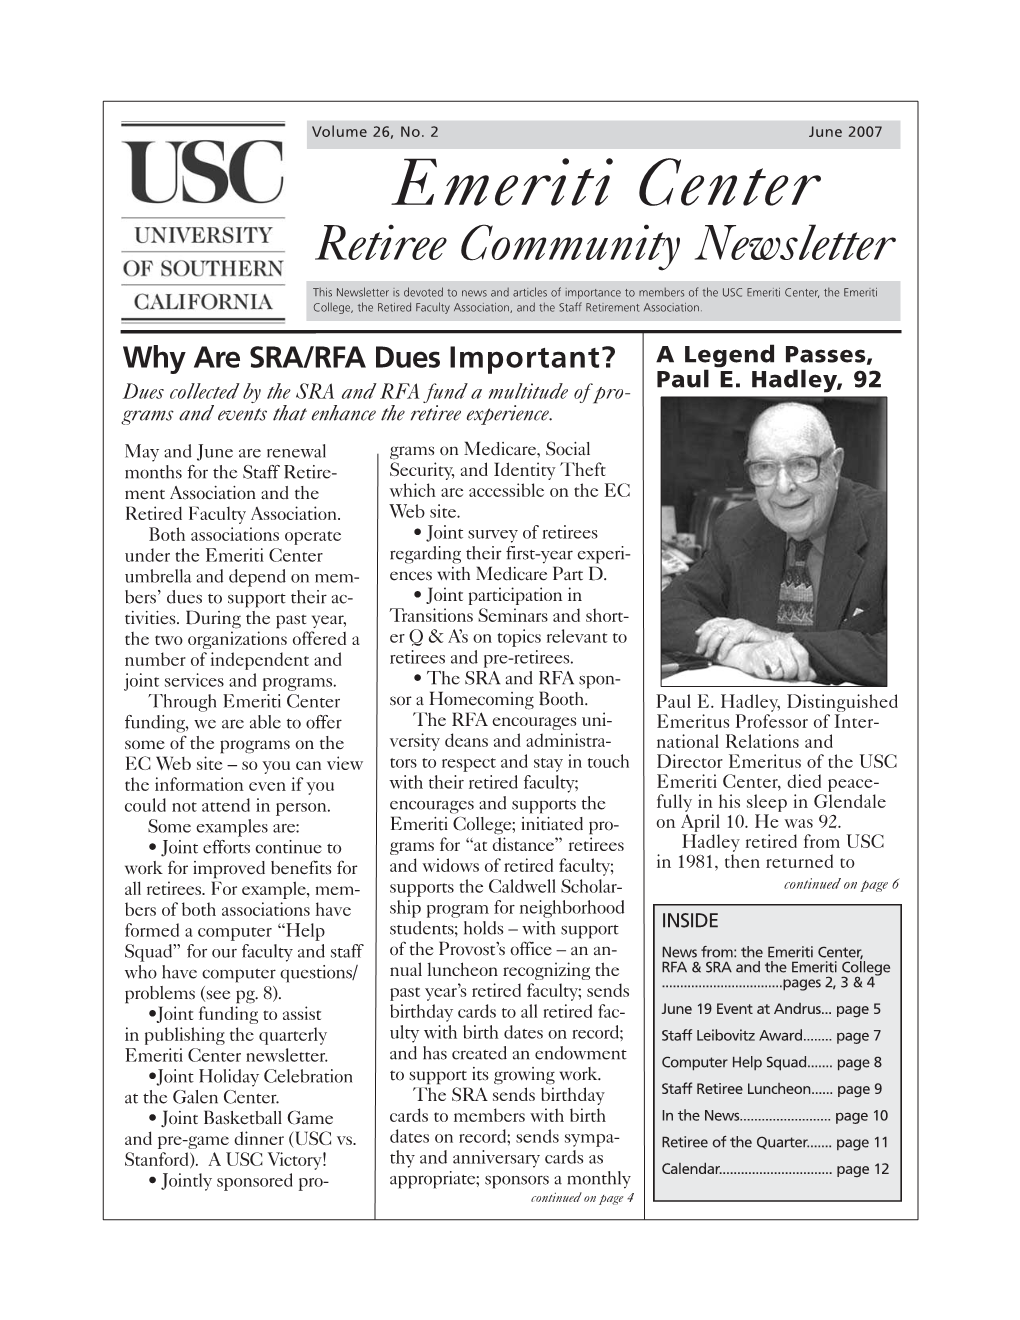 June 2007 Emeriti Center Retiree Community Newsletter